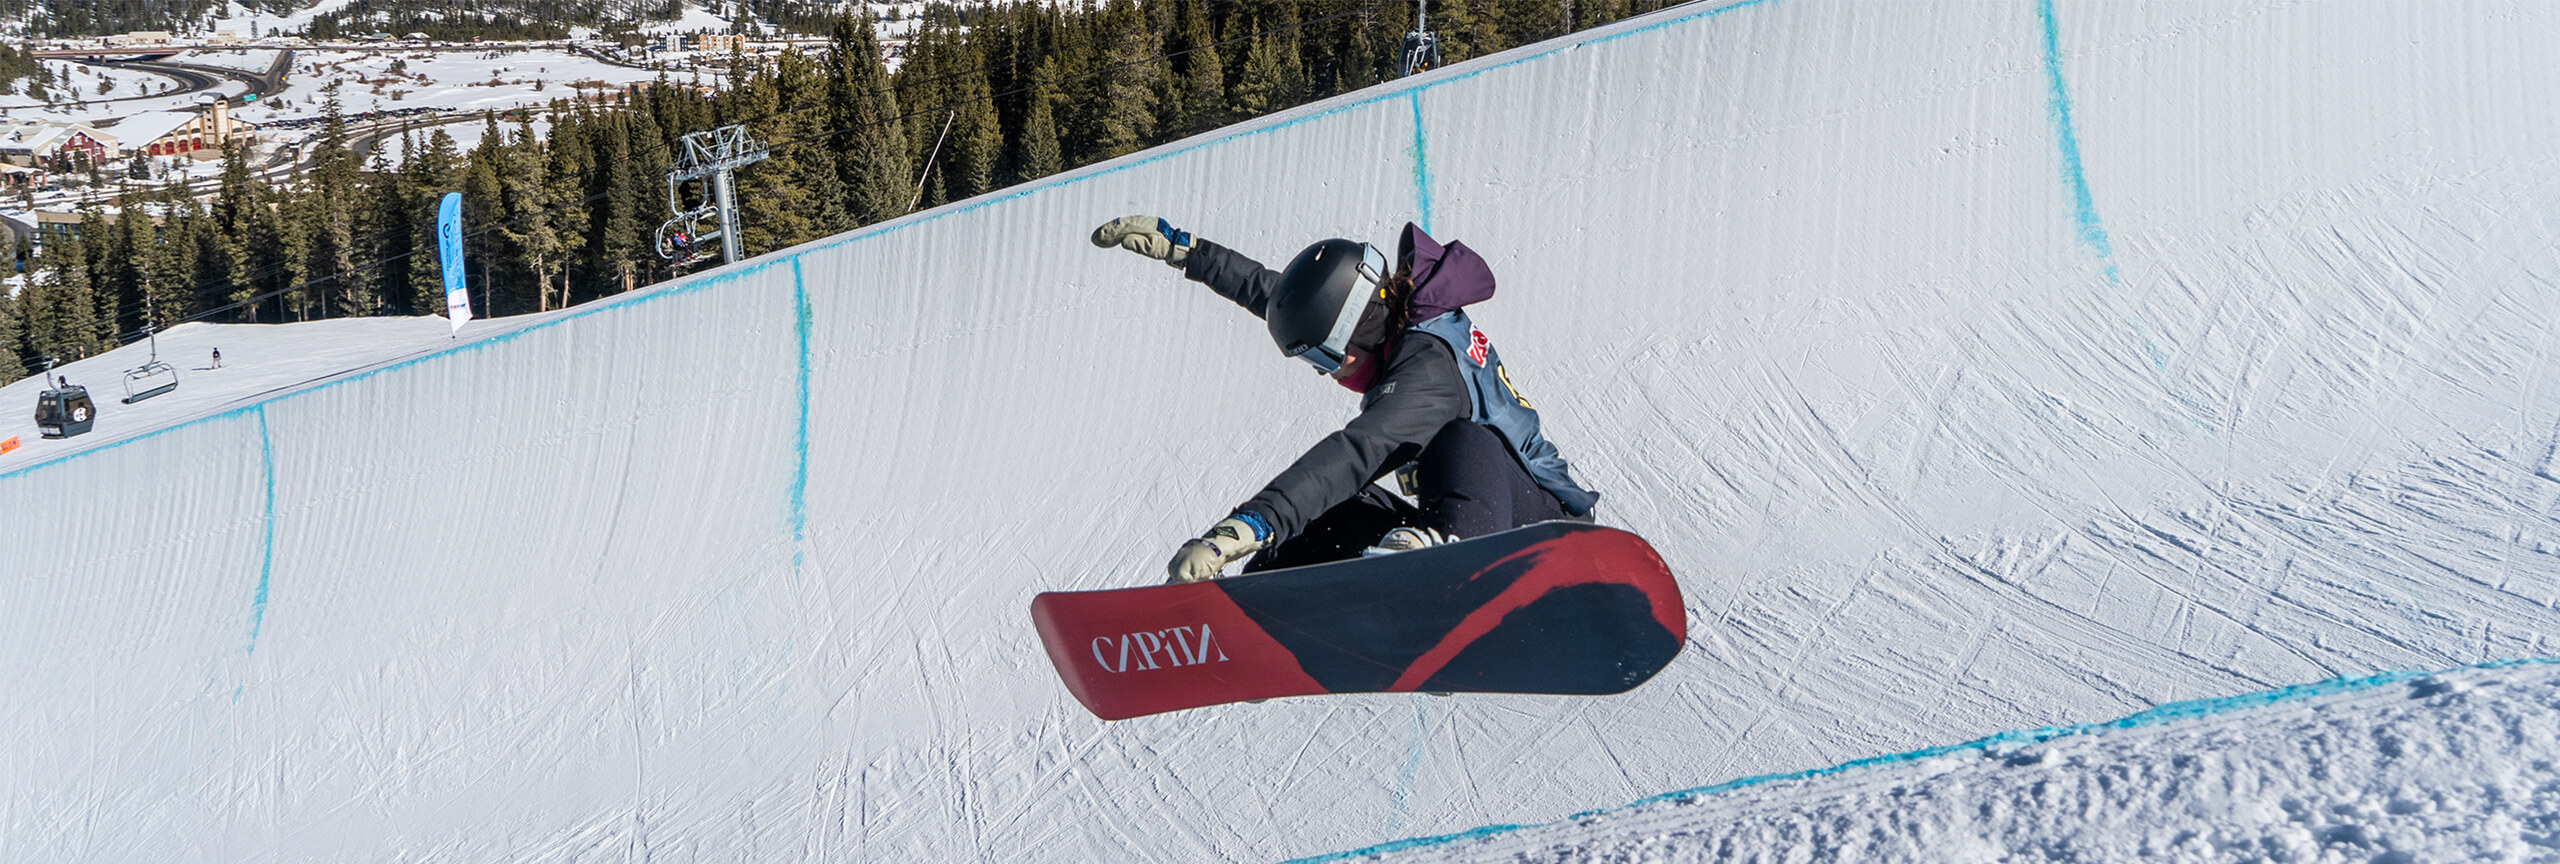 Snowboarder in half pipe grabbing board in USASA Snowboard National Championships at Copper